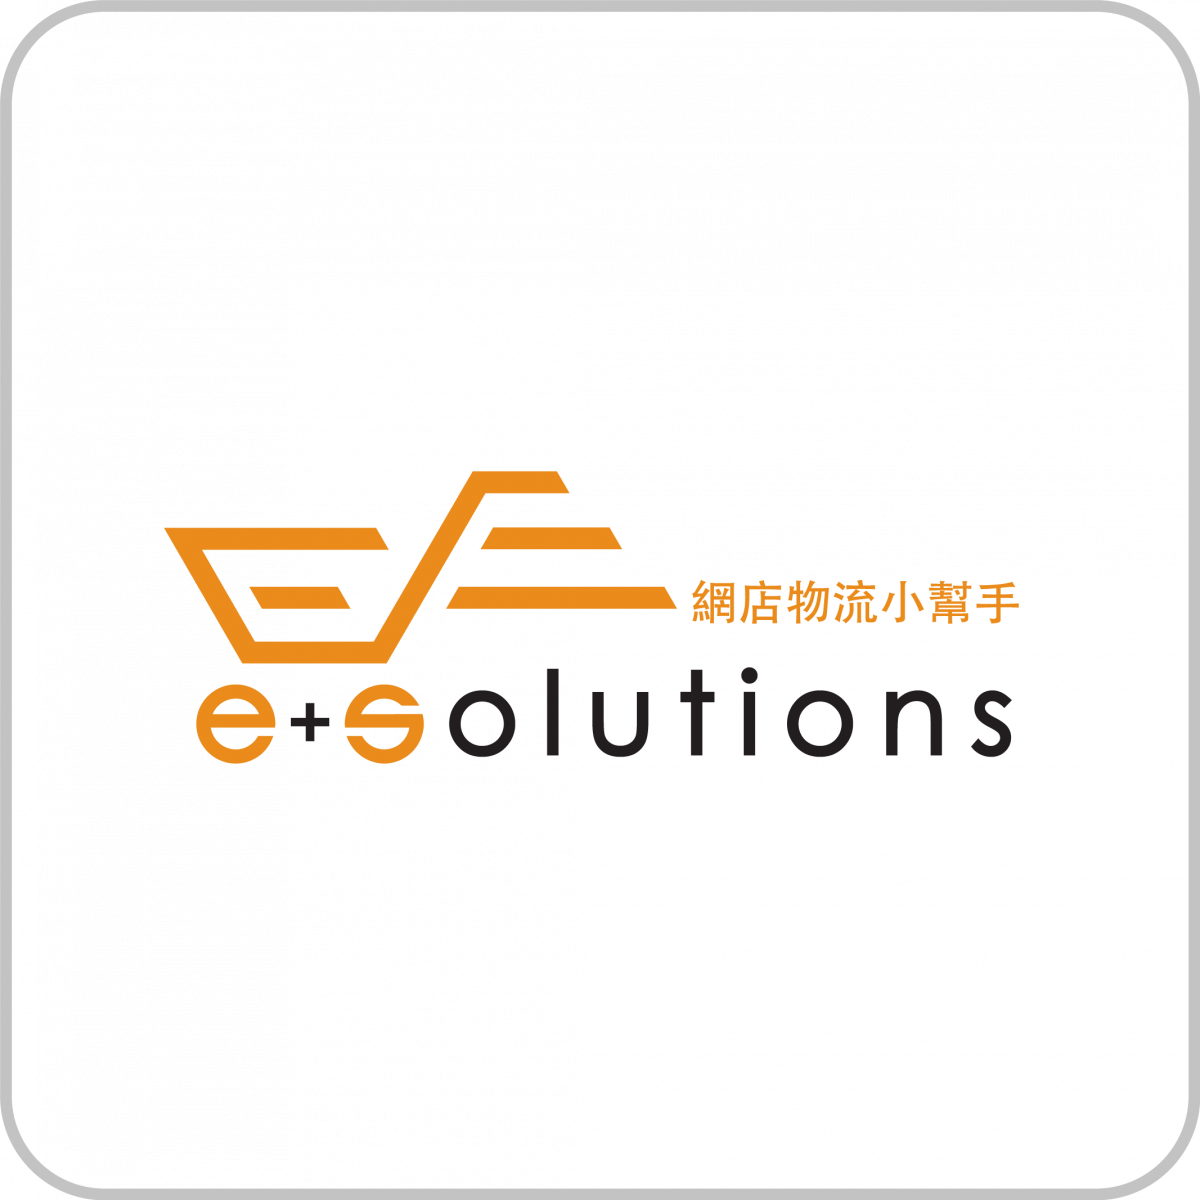 e+solutions